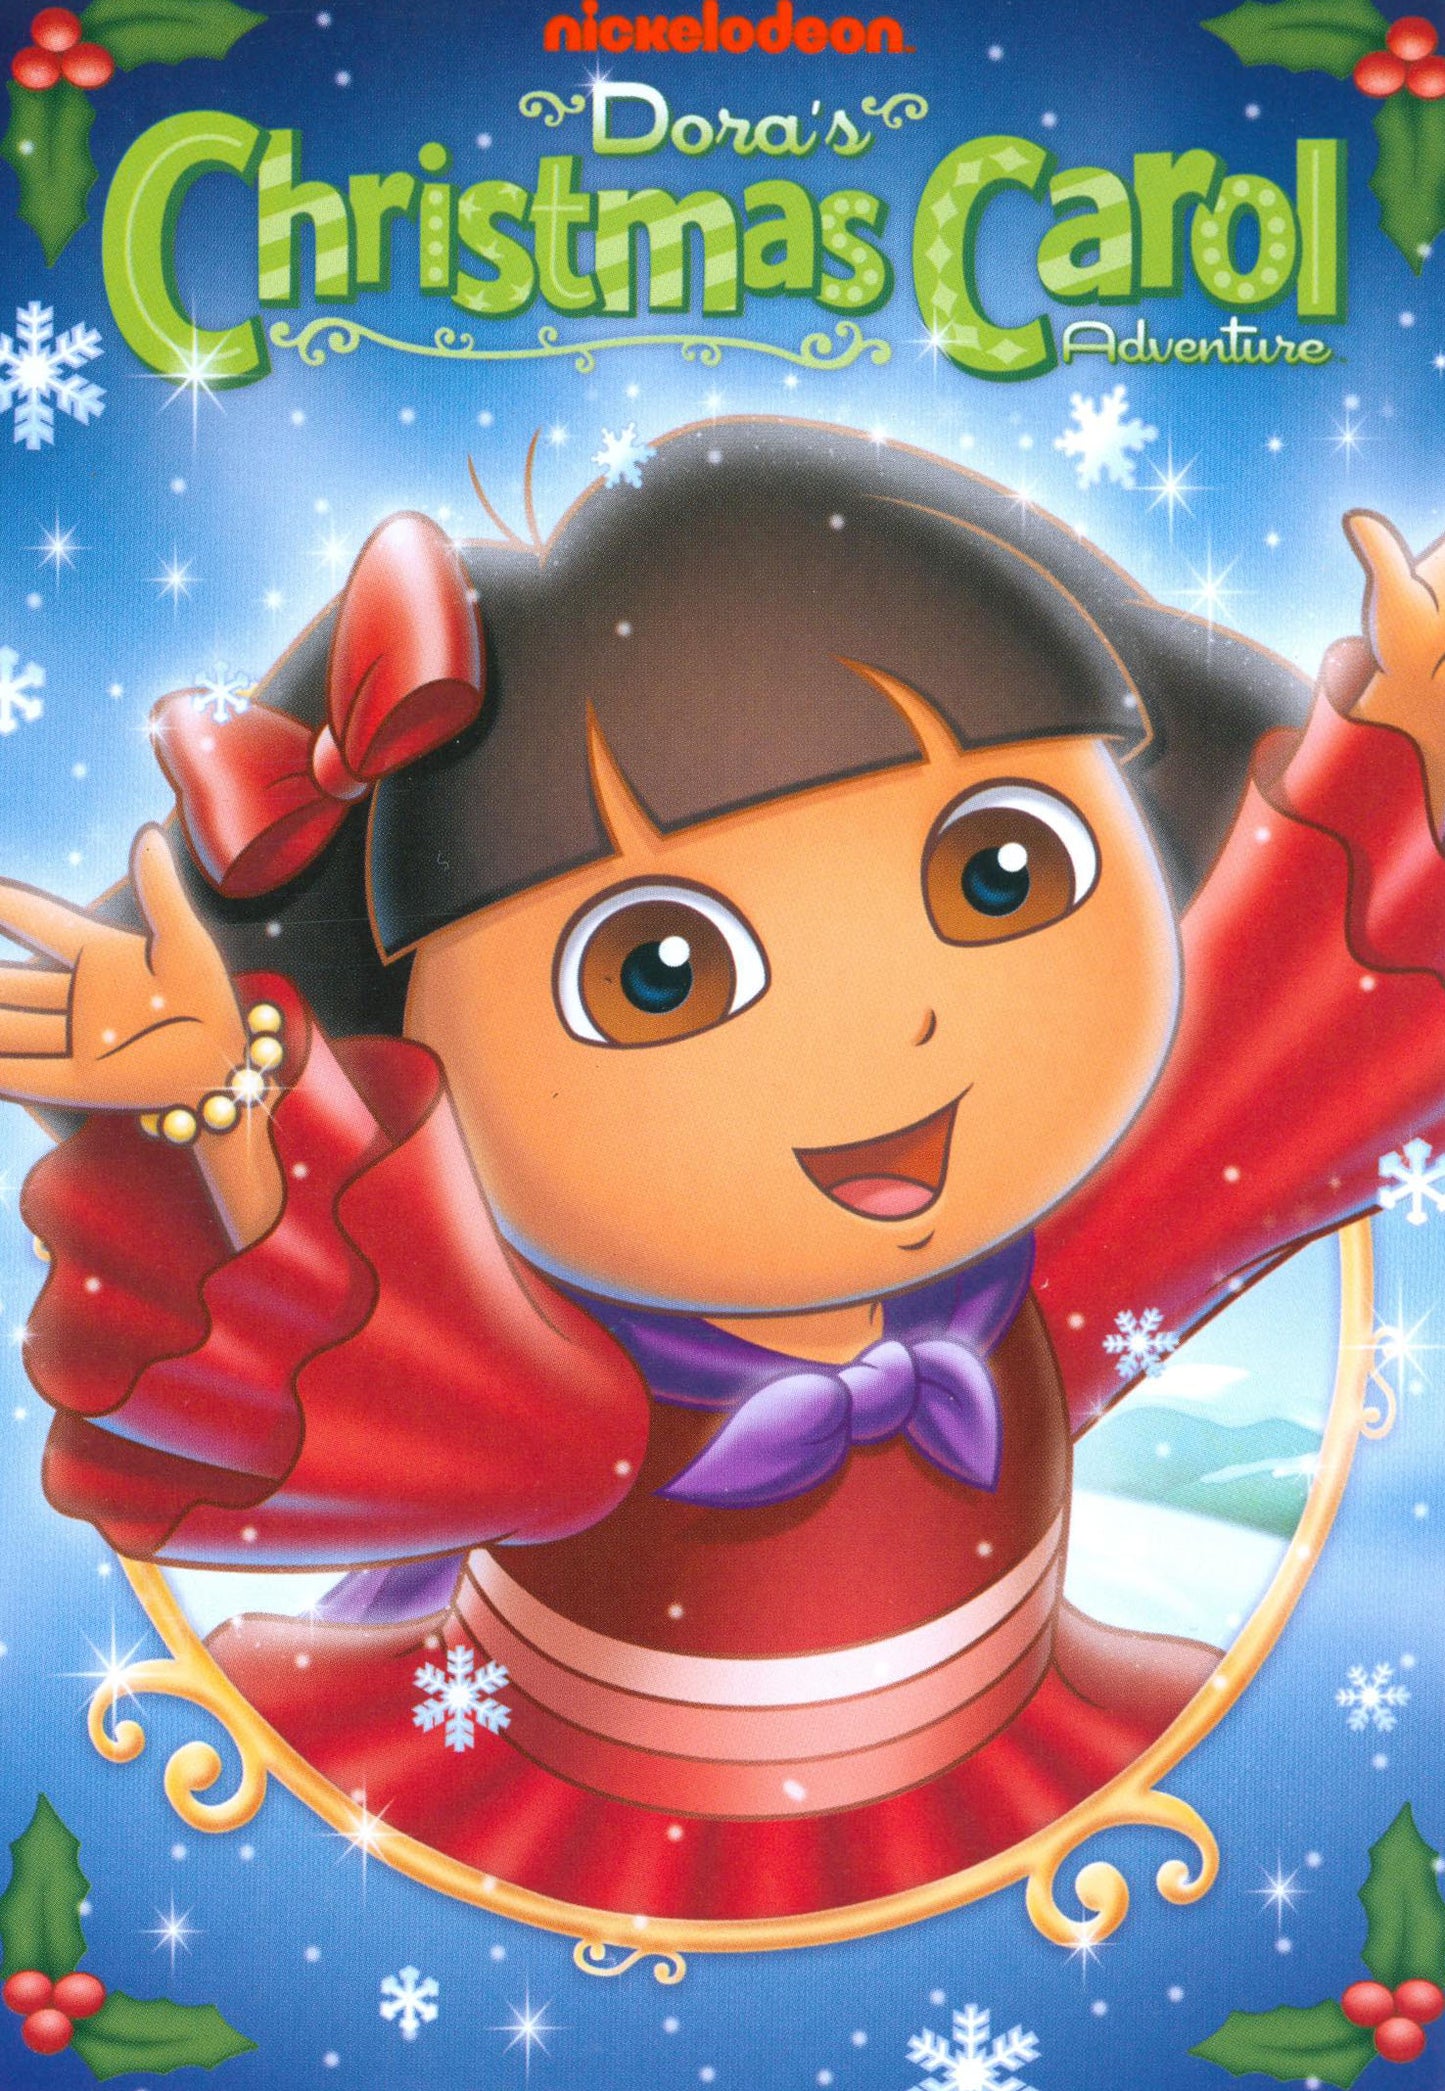 Dora's Christmas [Video] cover art